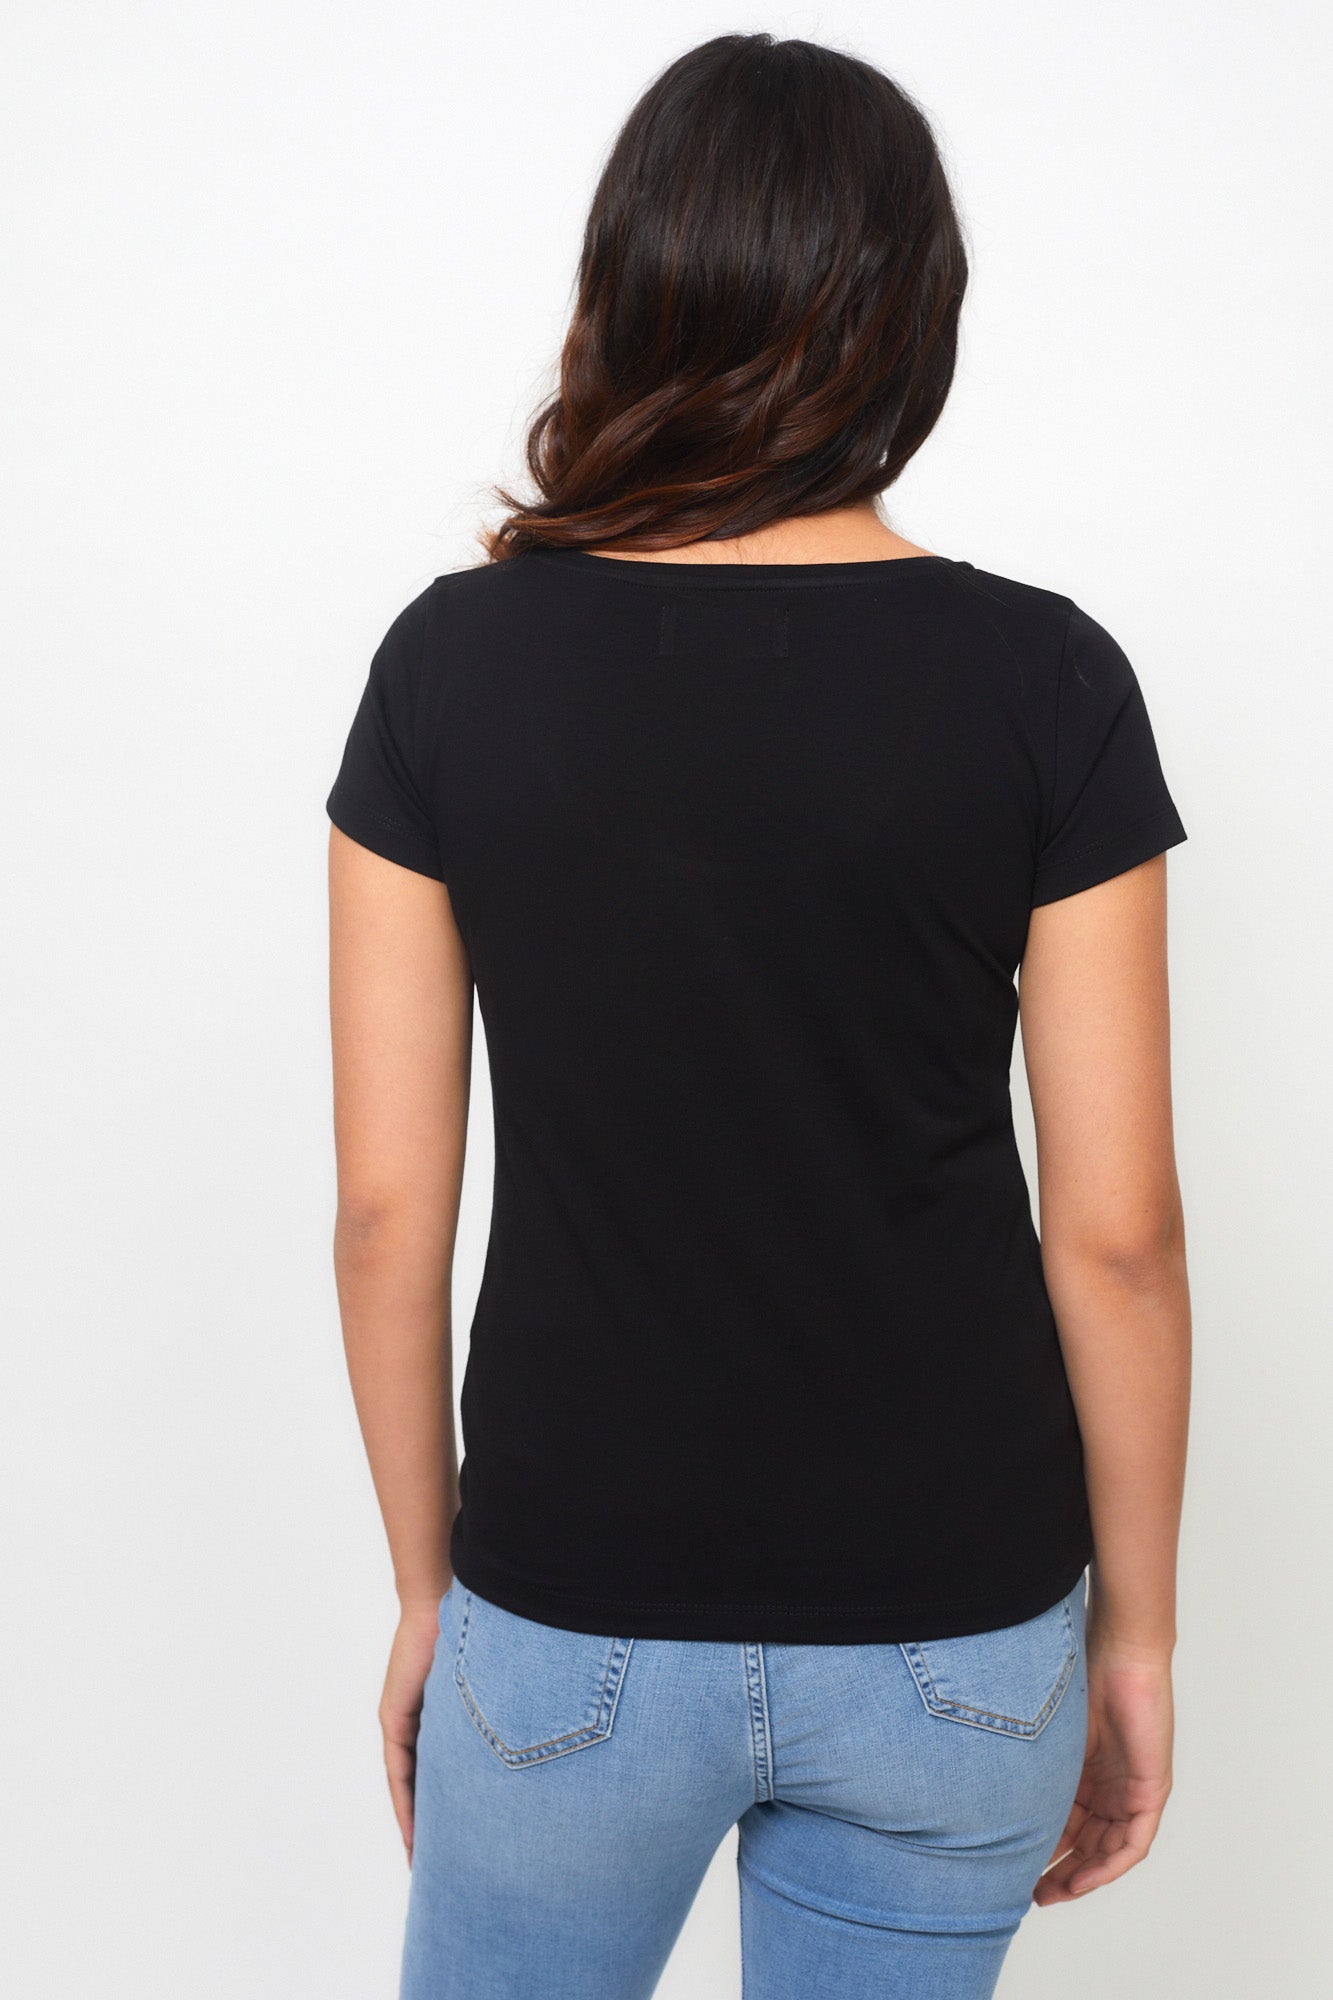 T shirts for Women | Pima Scoop Women T shirt Carbon Black